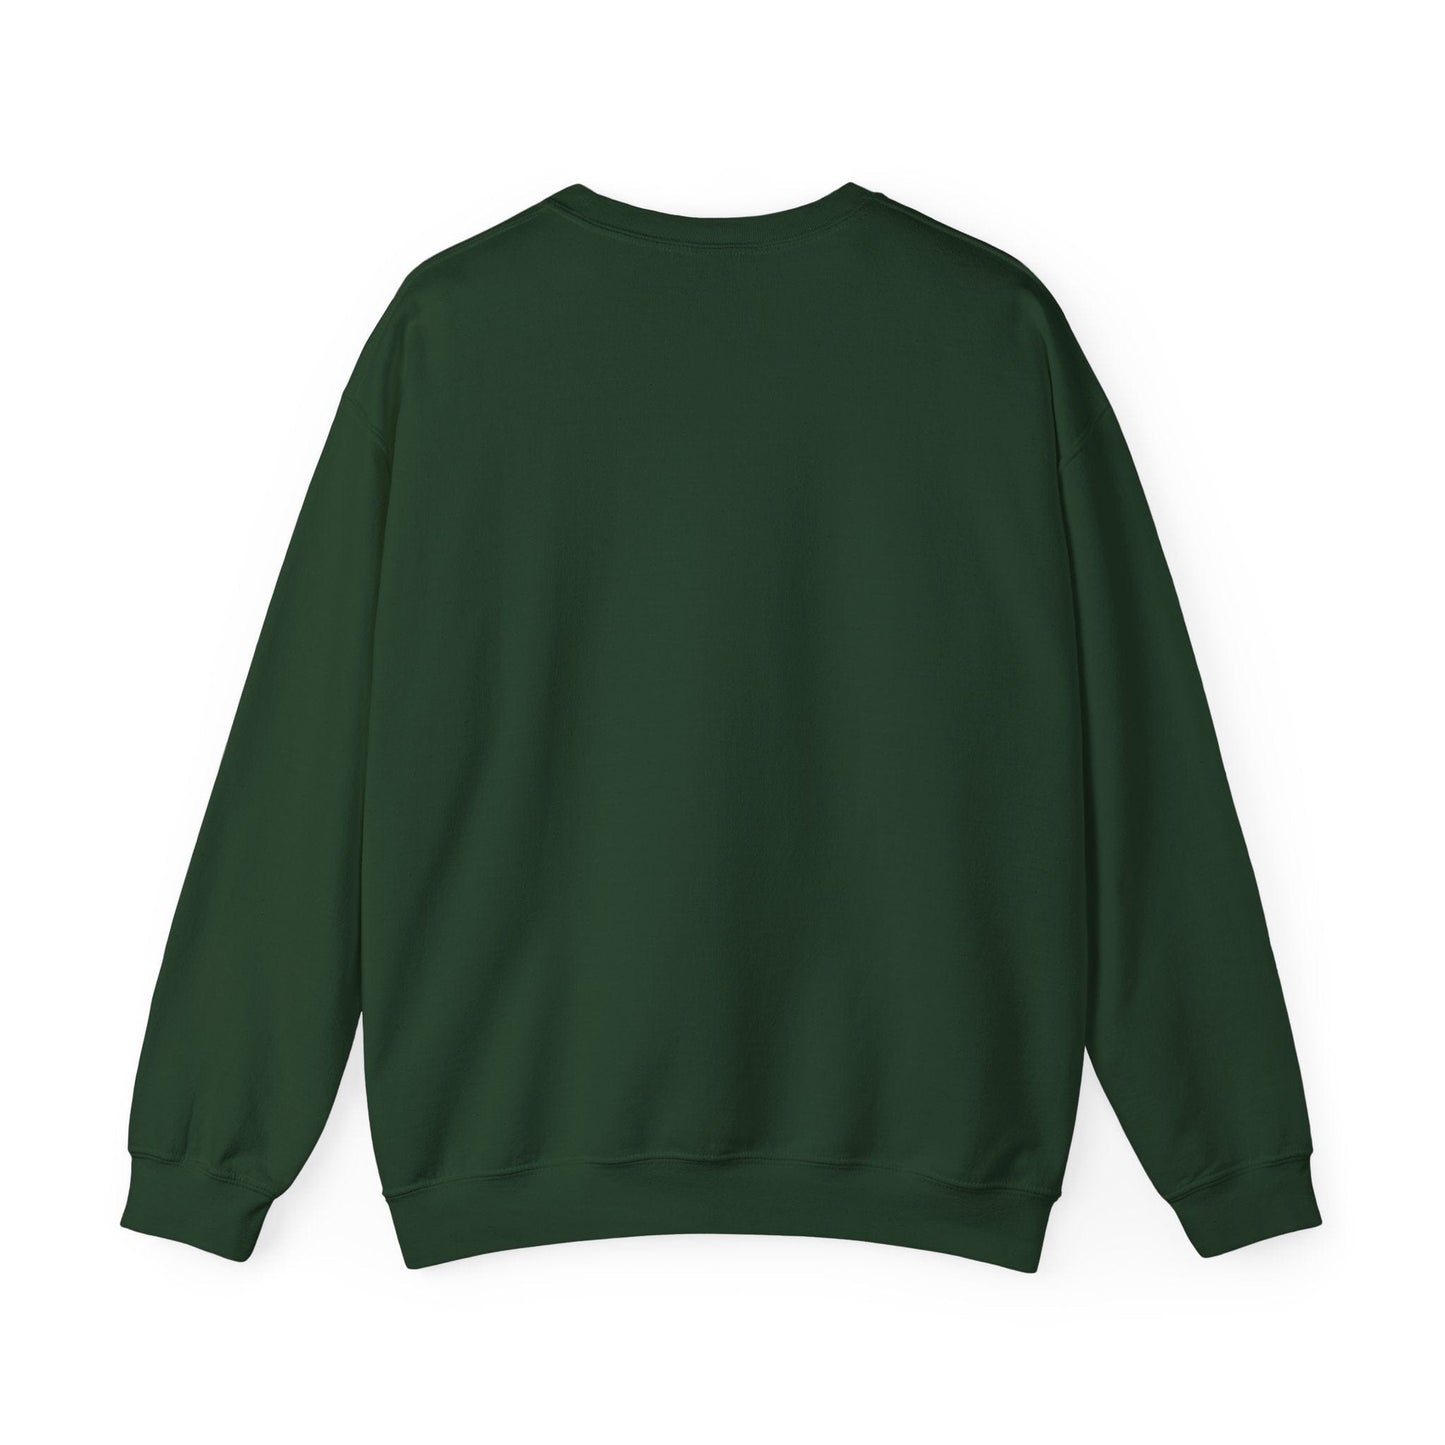 Sweatshirt "Scales of Affection" Libra Romantic Sweater: Enchant in Comfort